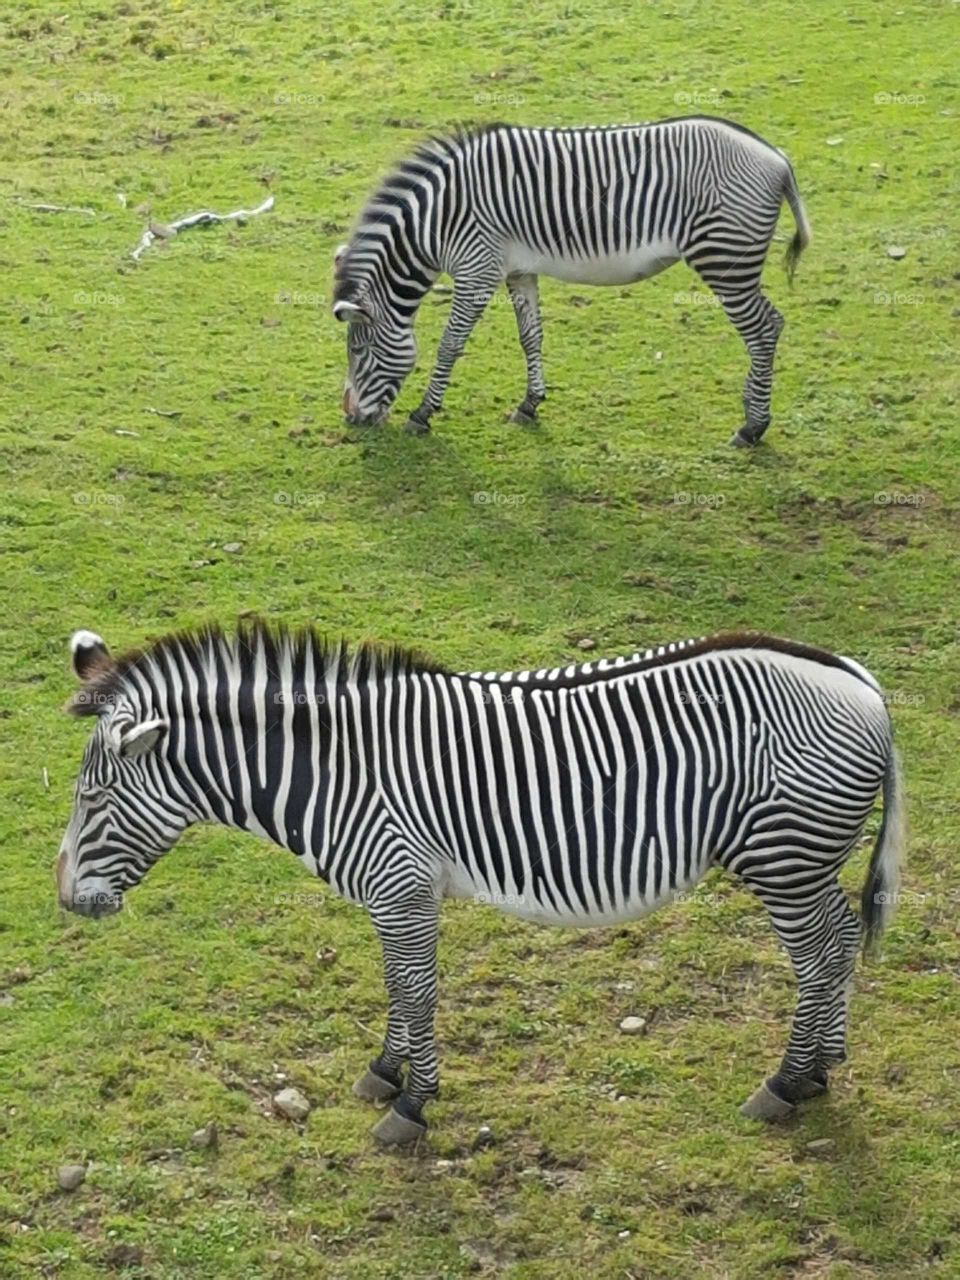 Zebra at Edinburgh Zoo